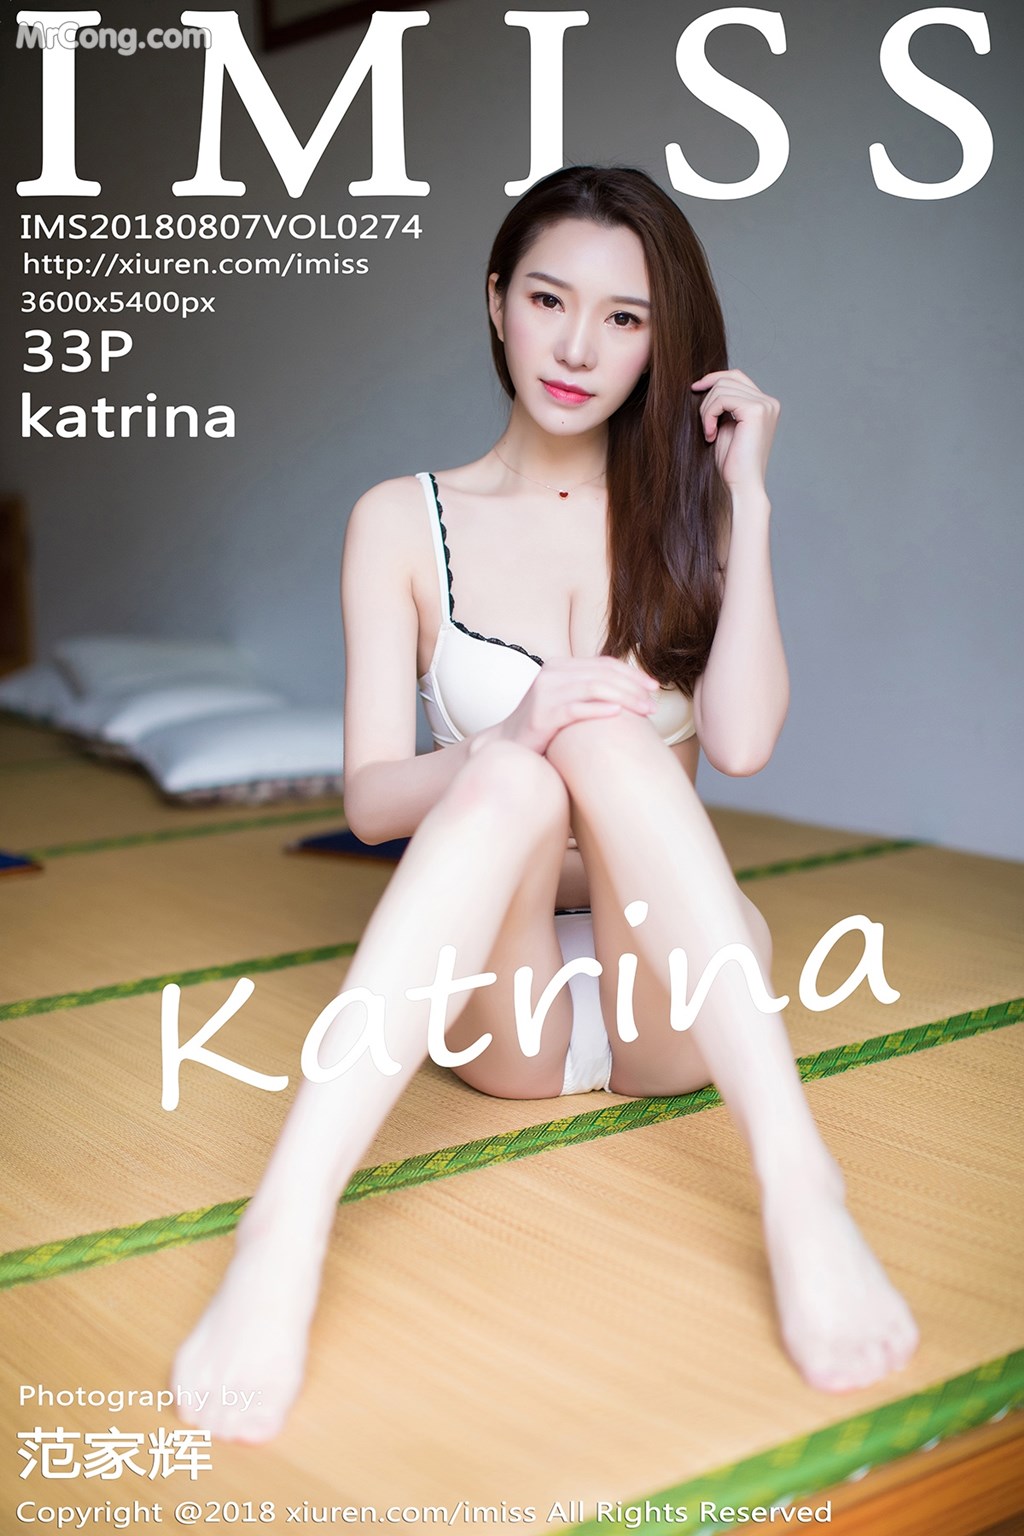 IMISS Vol.274: Model katrina (34 photos)